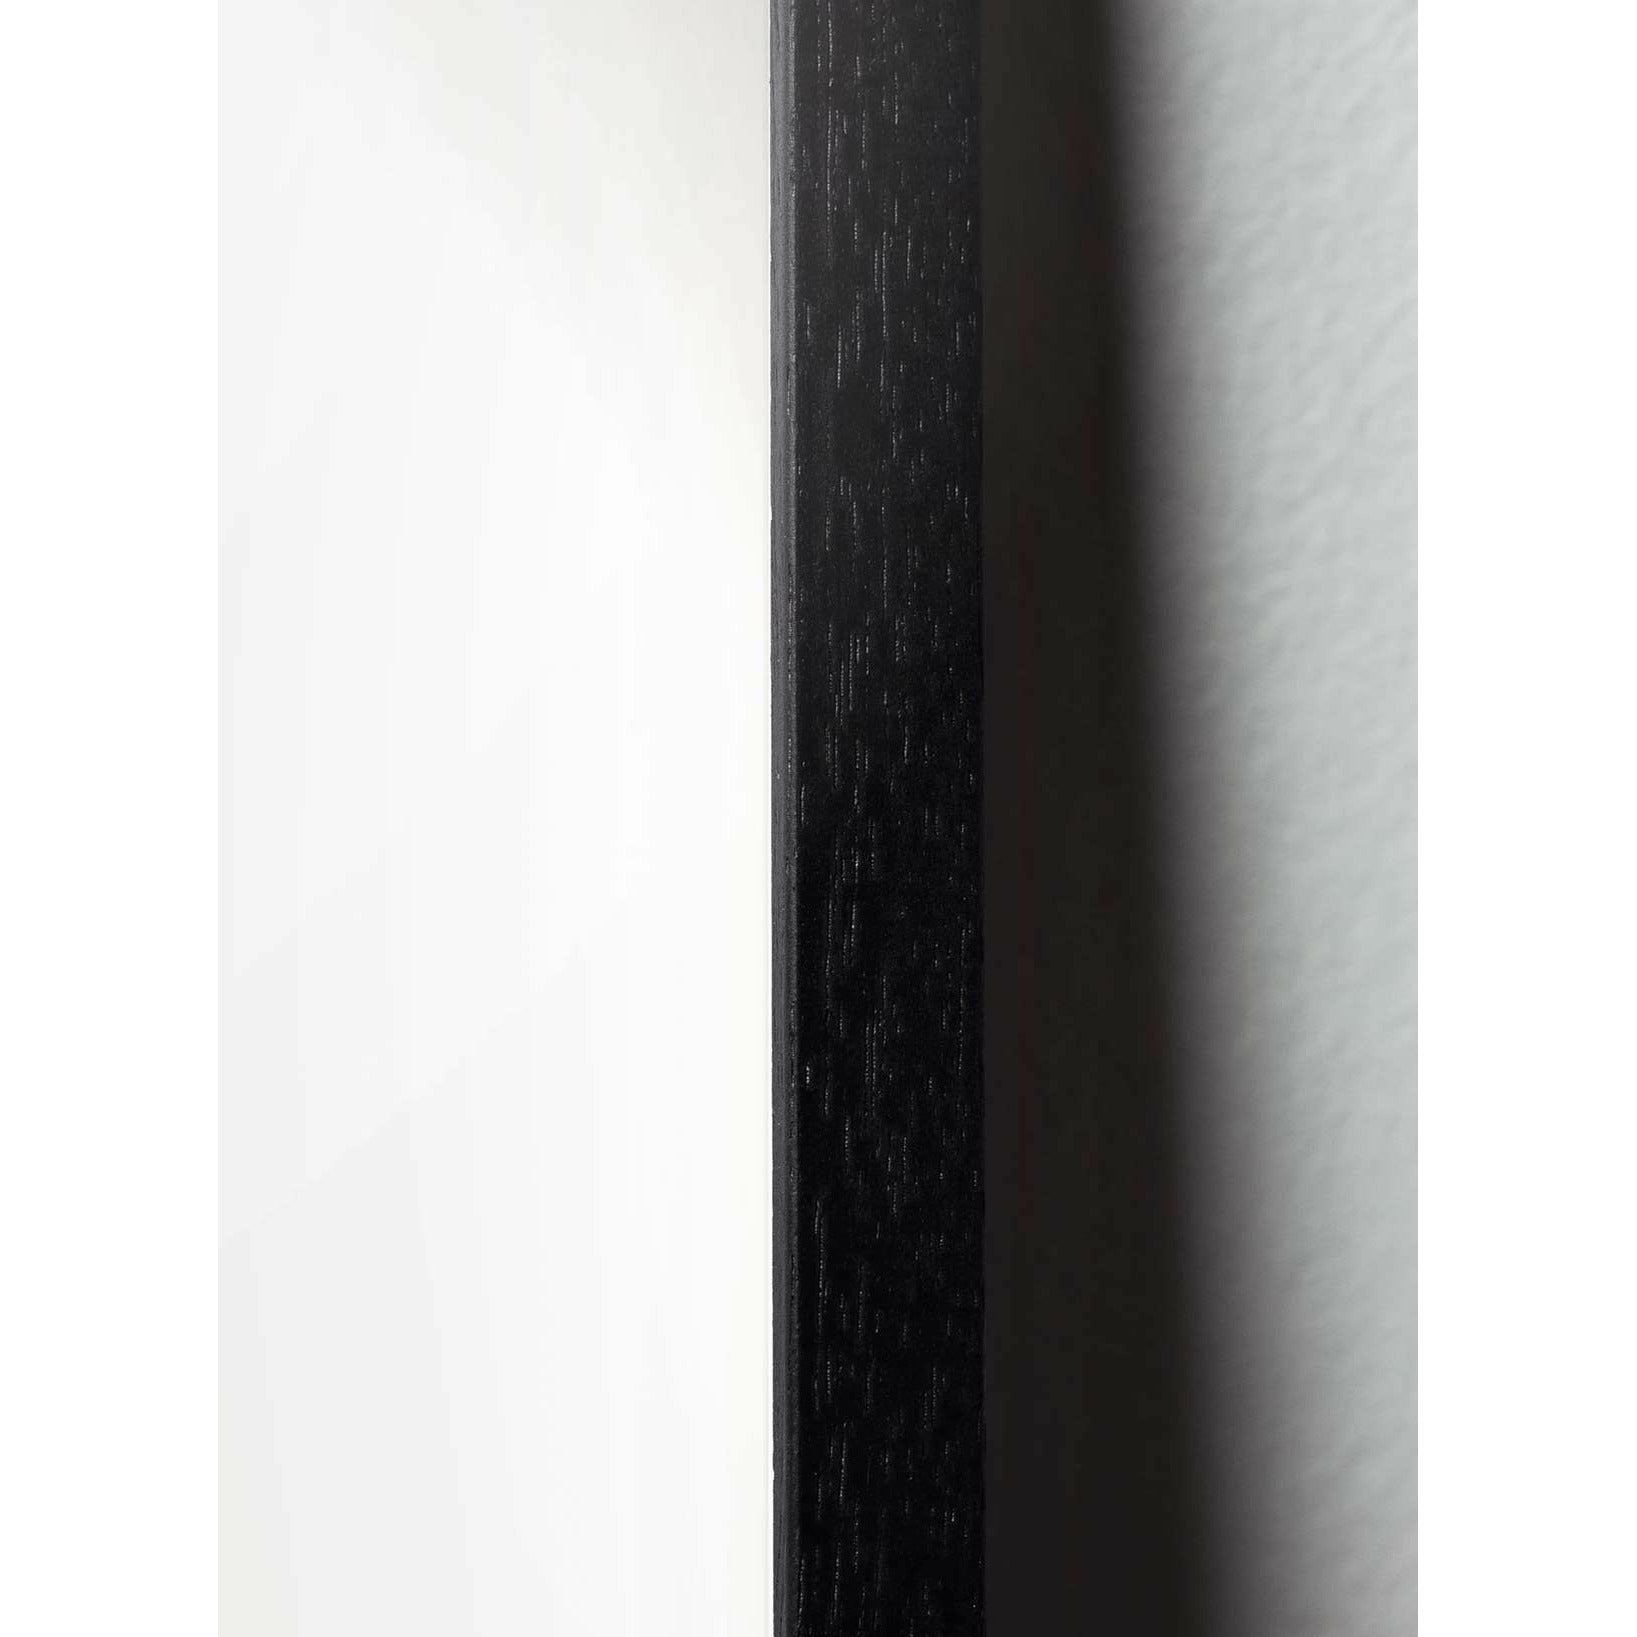 Brainchild Släpp klassisk affisch, ram i svart -målat trä 30x40 cm, svart bakgrund